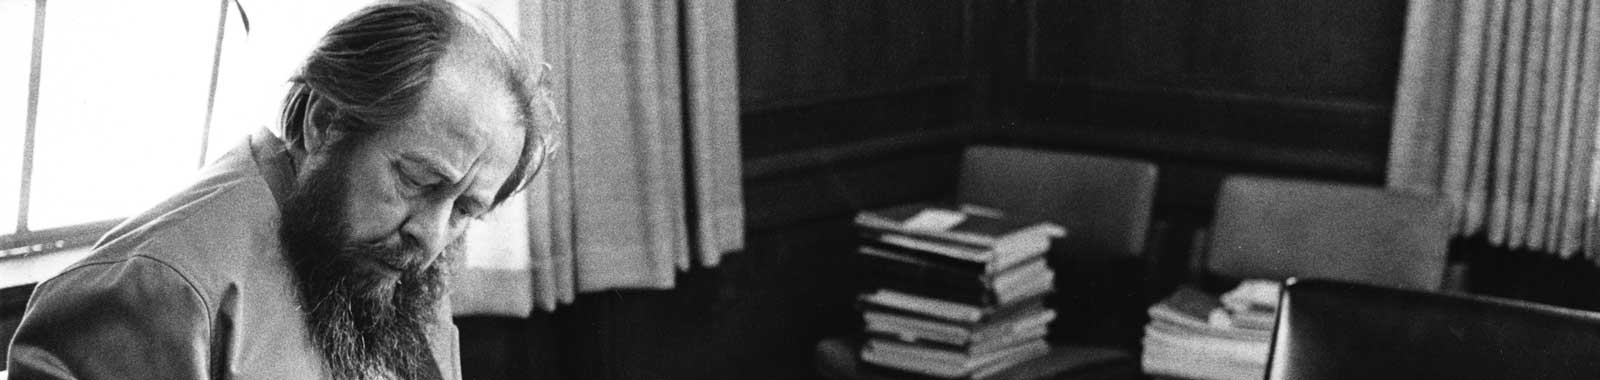 Aleksandr Solzhenitsyn sitting at a desk looking at newspapers